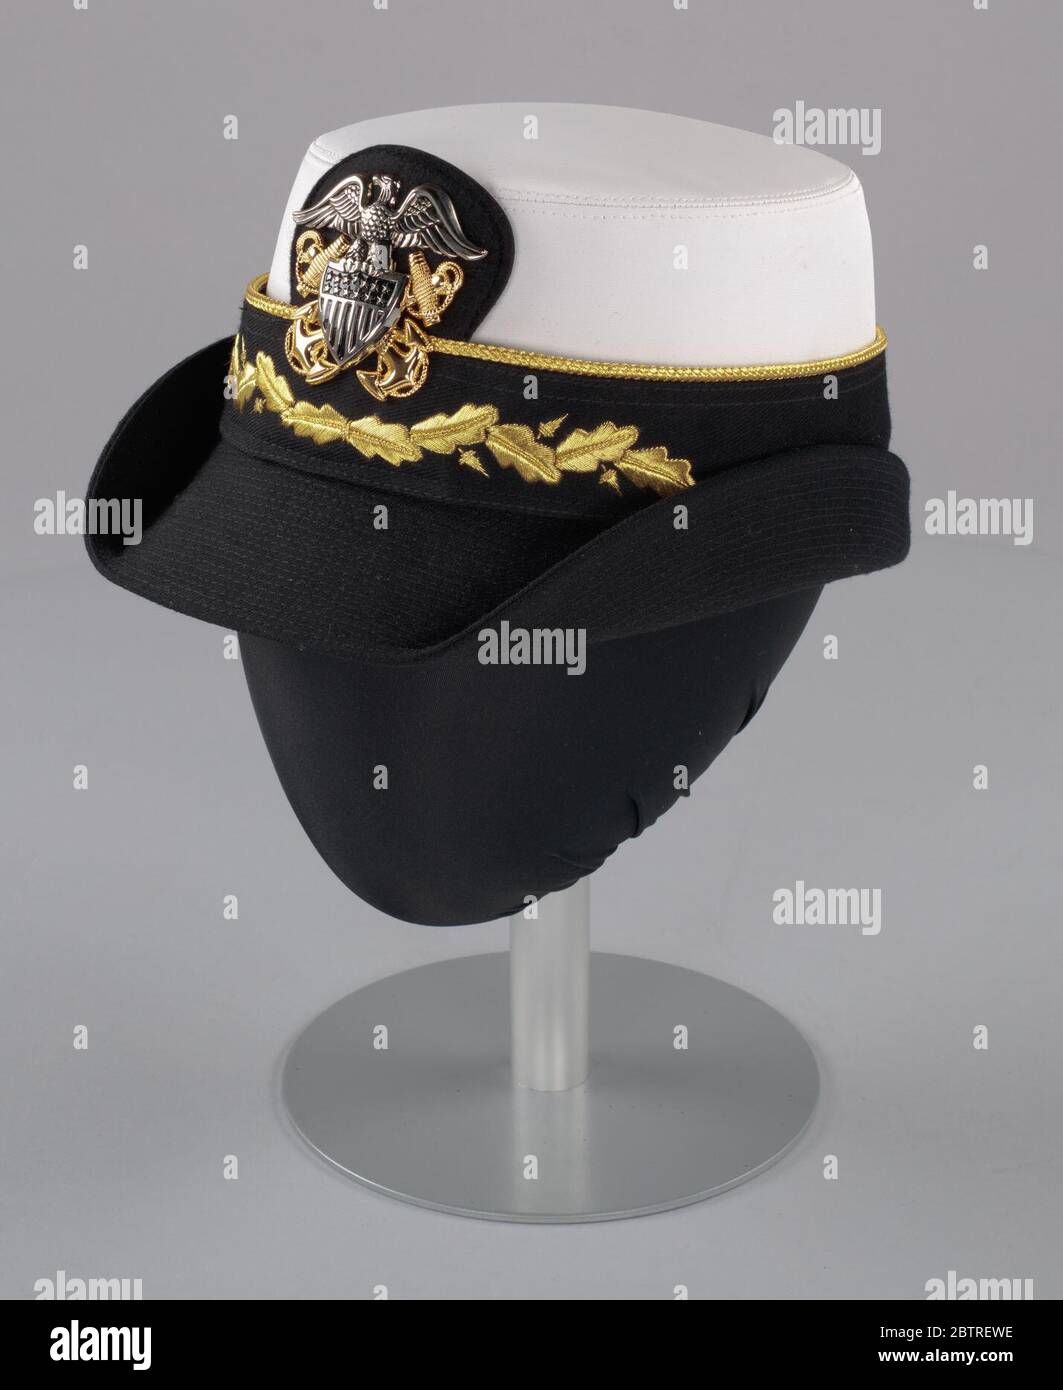 US Navy dress uniform hat worn by Admiral Michelle Howard. A US